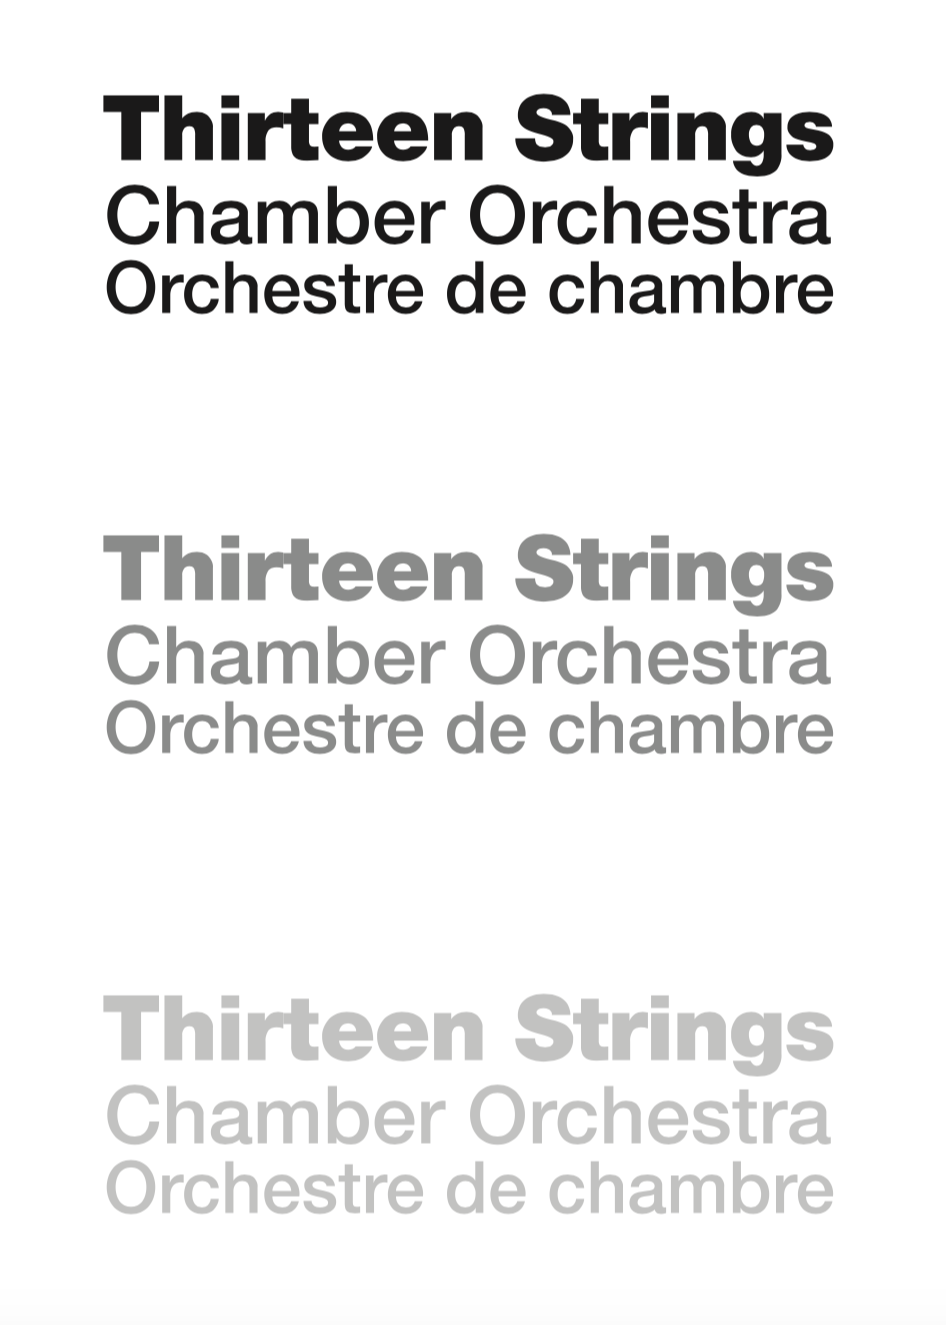 THIRTEEN STRINGS CHAMBER ORCHESTRA logo